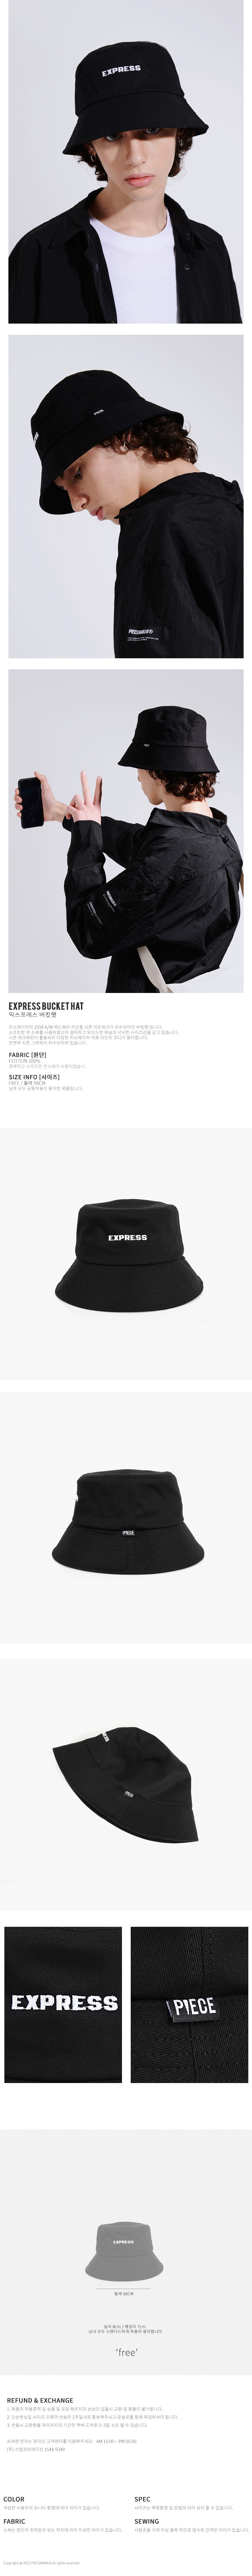 EXPRESS BUCKET HAT (BLACK) 39,000원 - 피스메이커 패션잡화, 모자, 버킷햇, 패션 바보사랑 EXPRESS BUCKET HAT (BLACK) 39,000원 - 피스메이커 패션잡화, 모자, 버킷햇, 패션 바보사랑